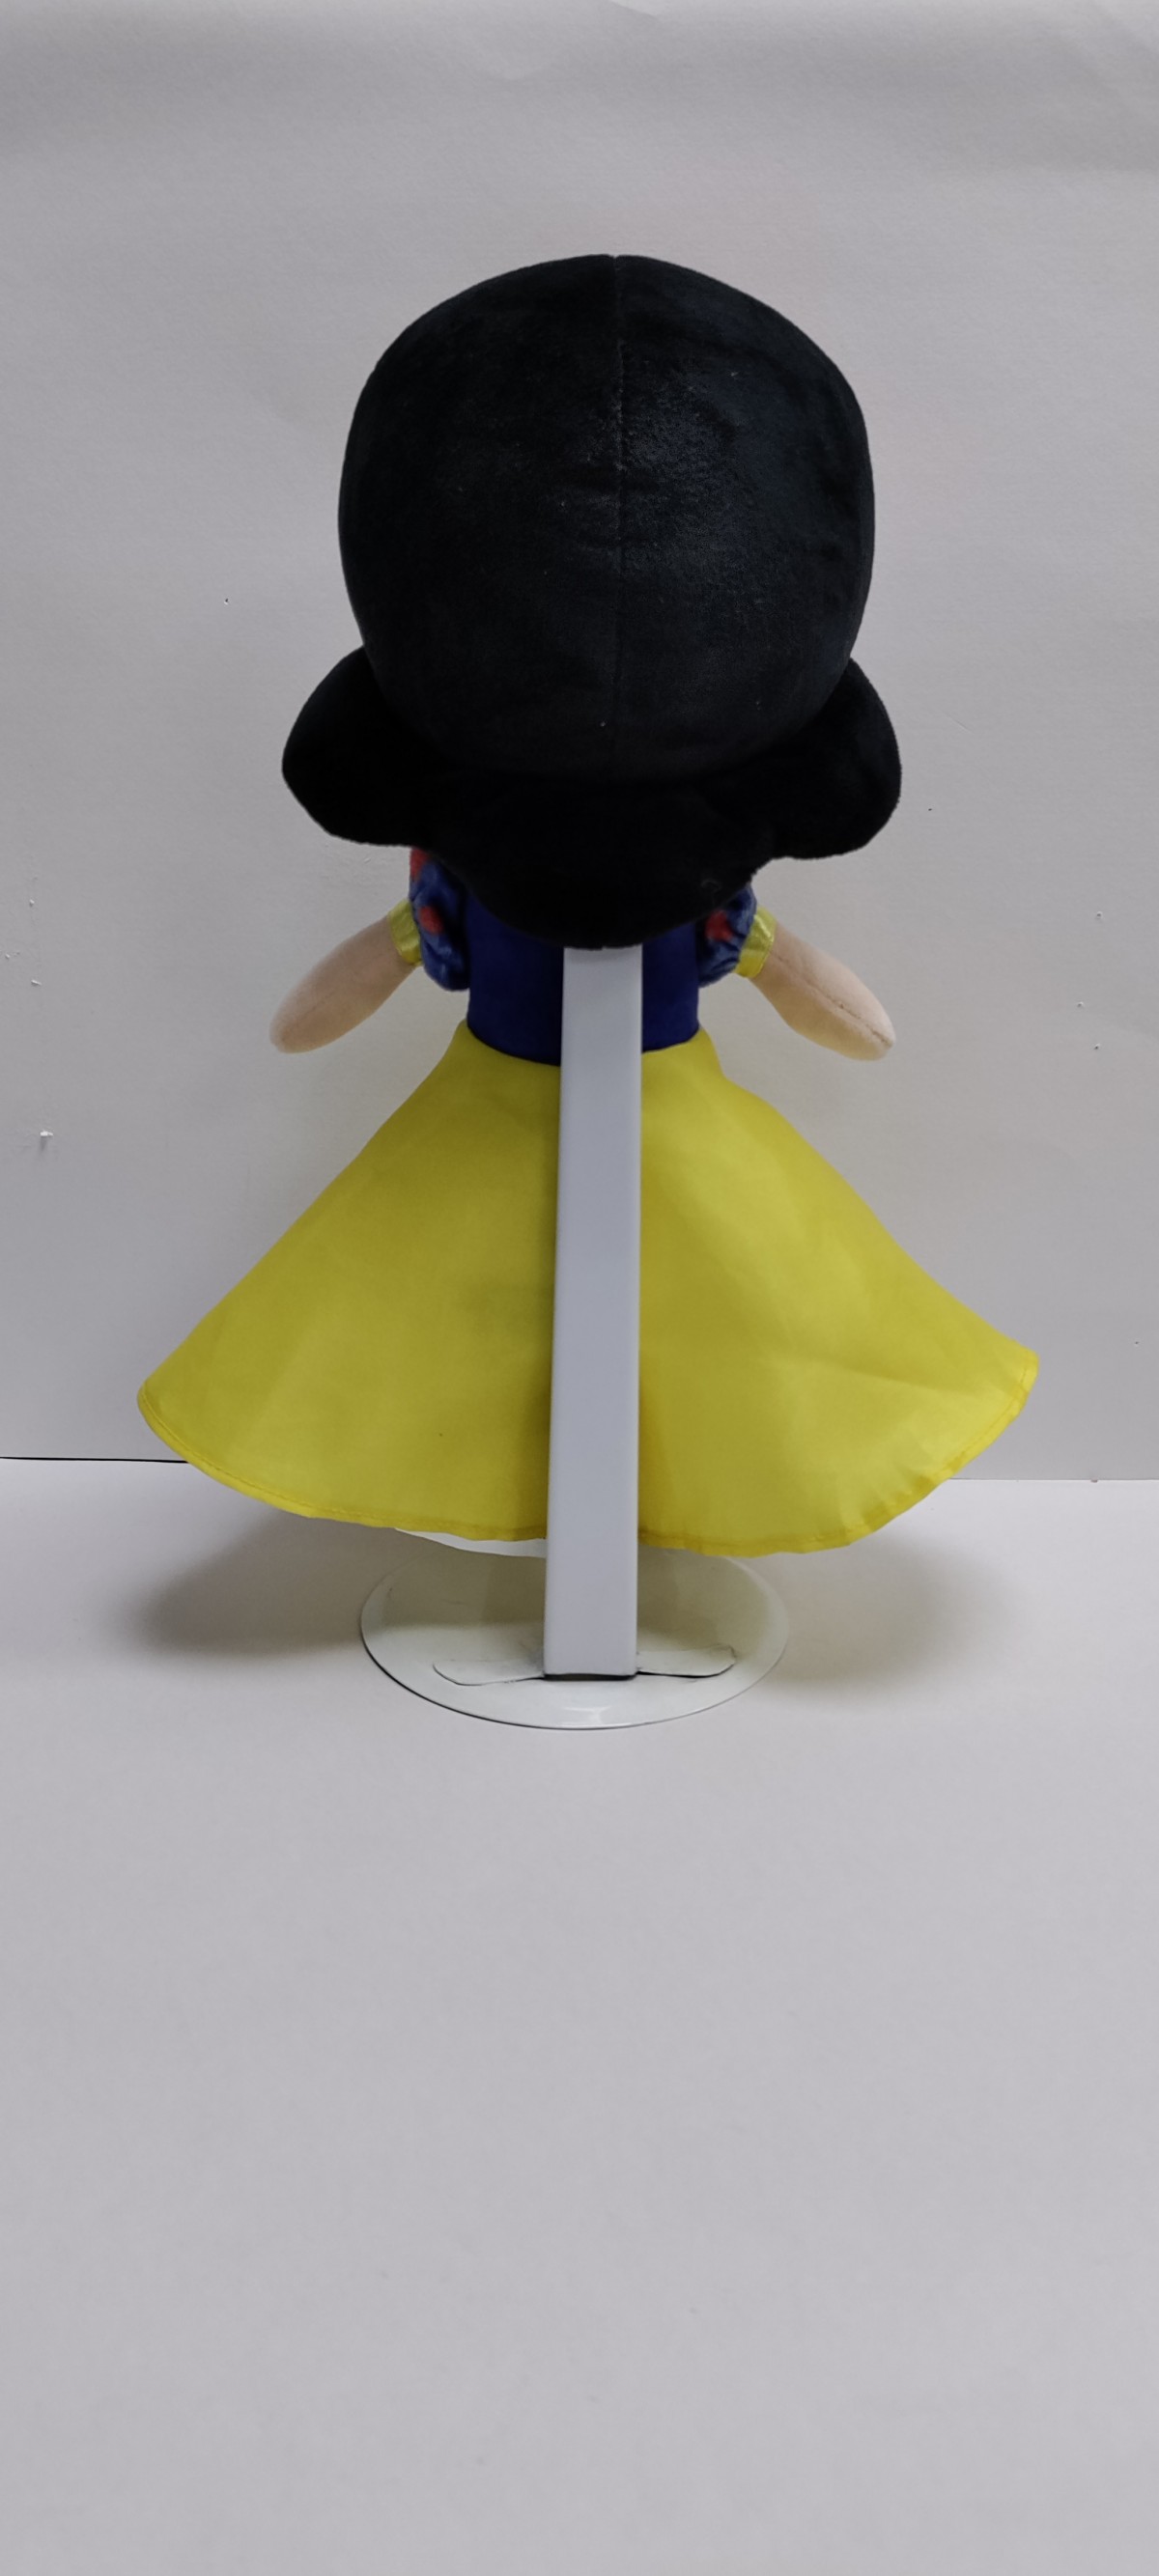 Disney 10Inch Snow White Multicolour 2Y+